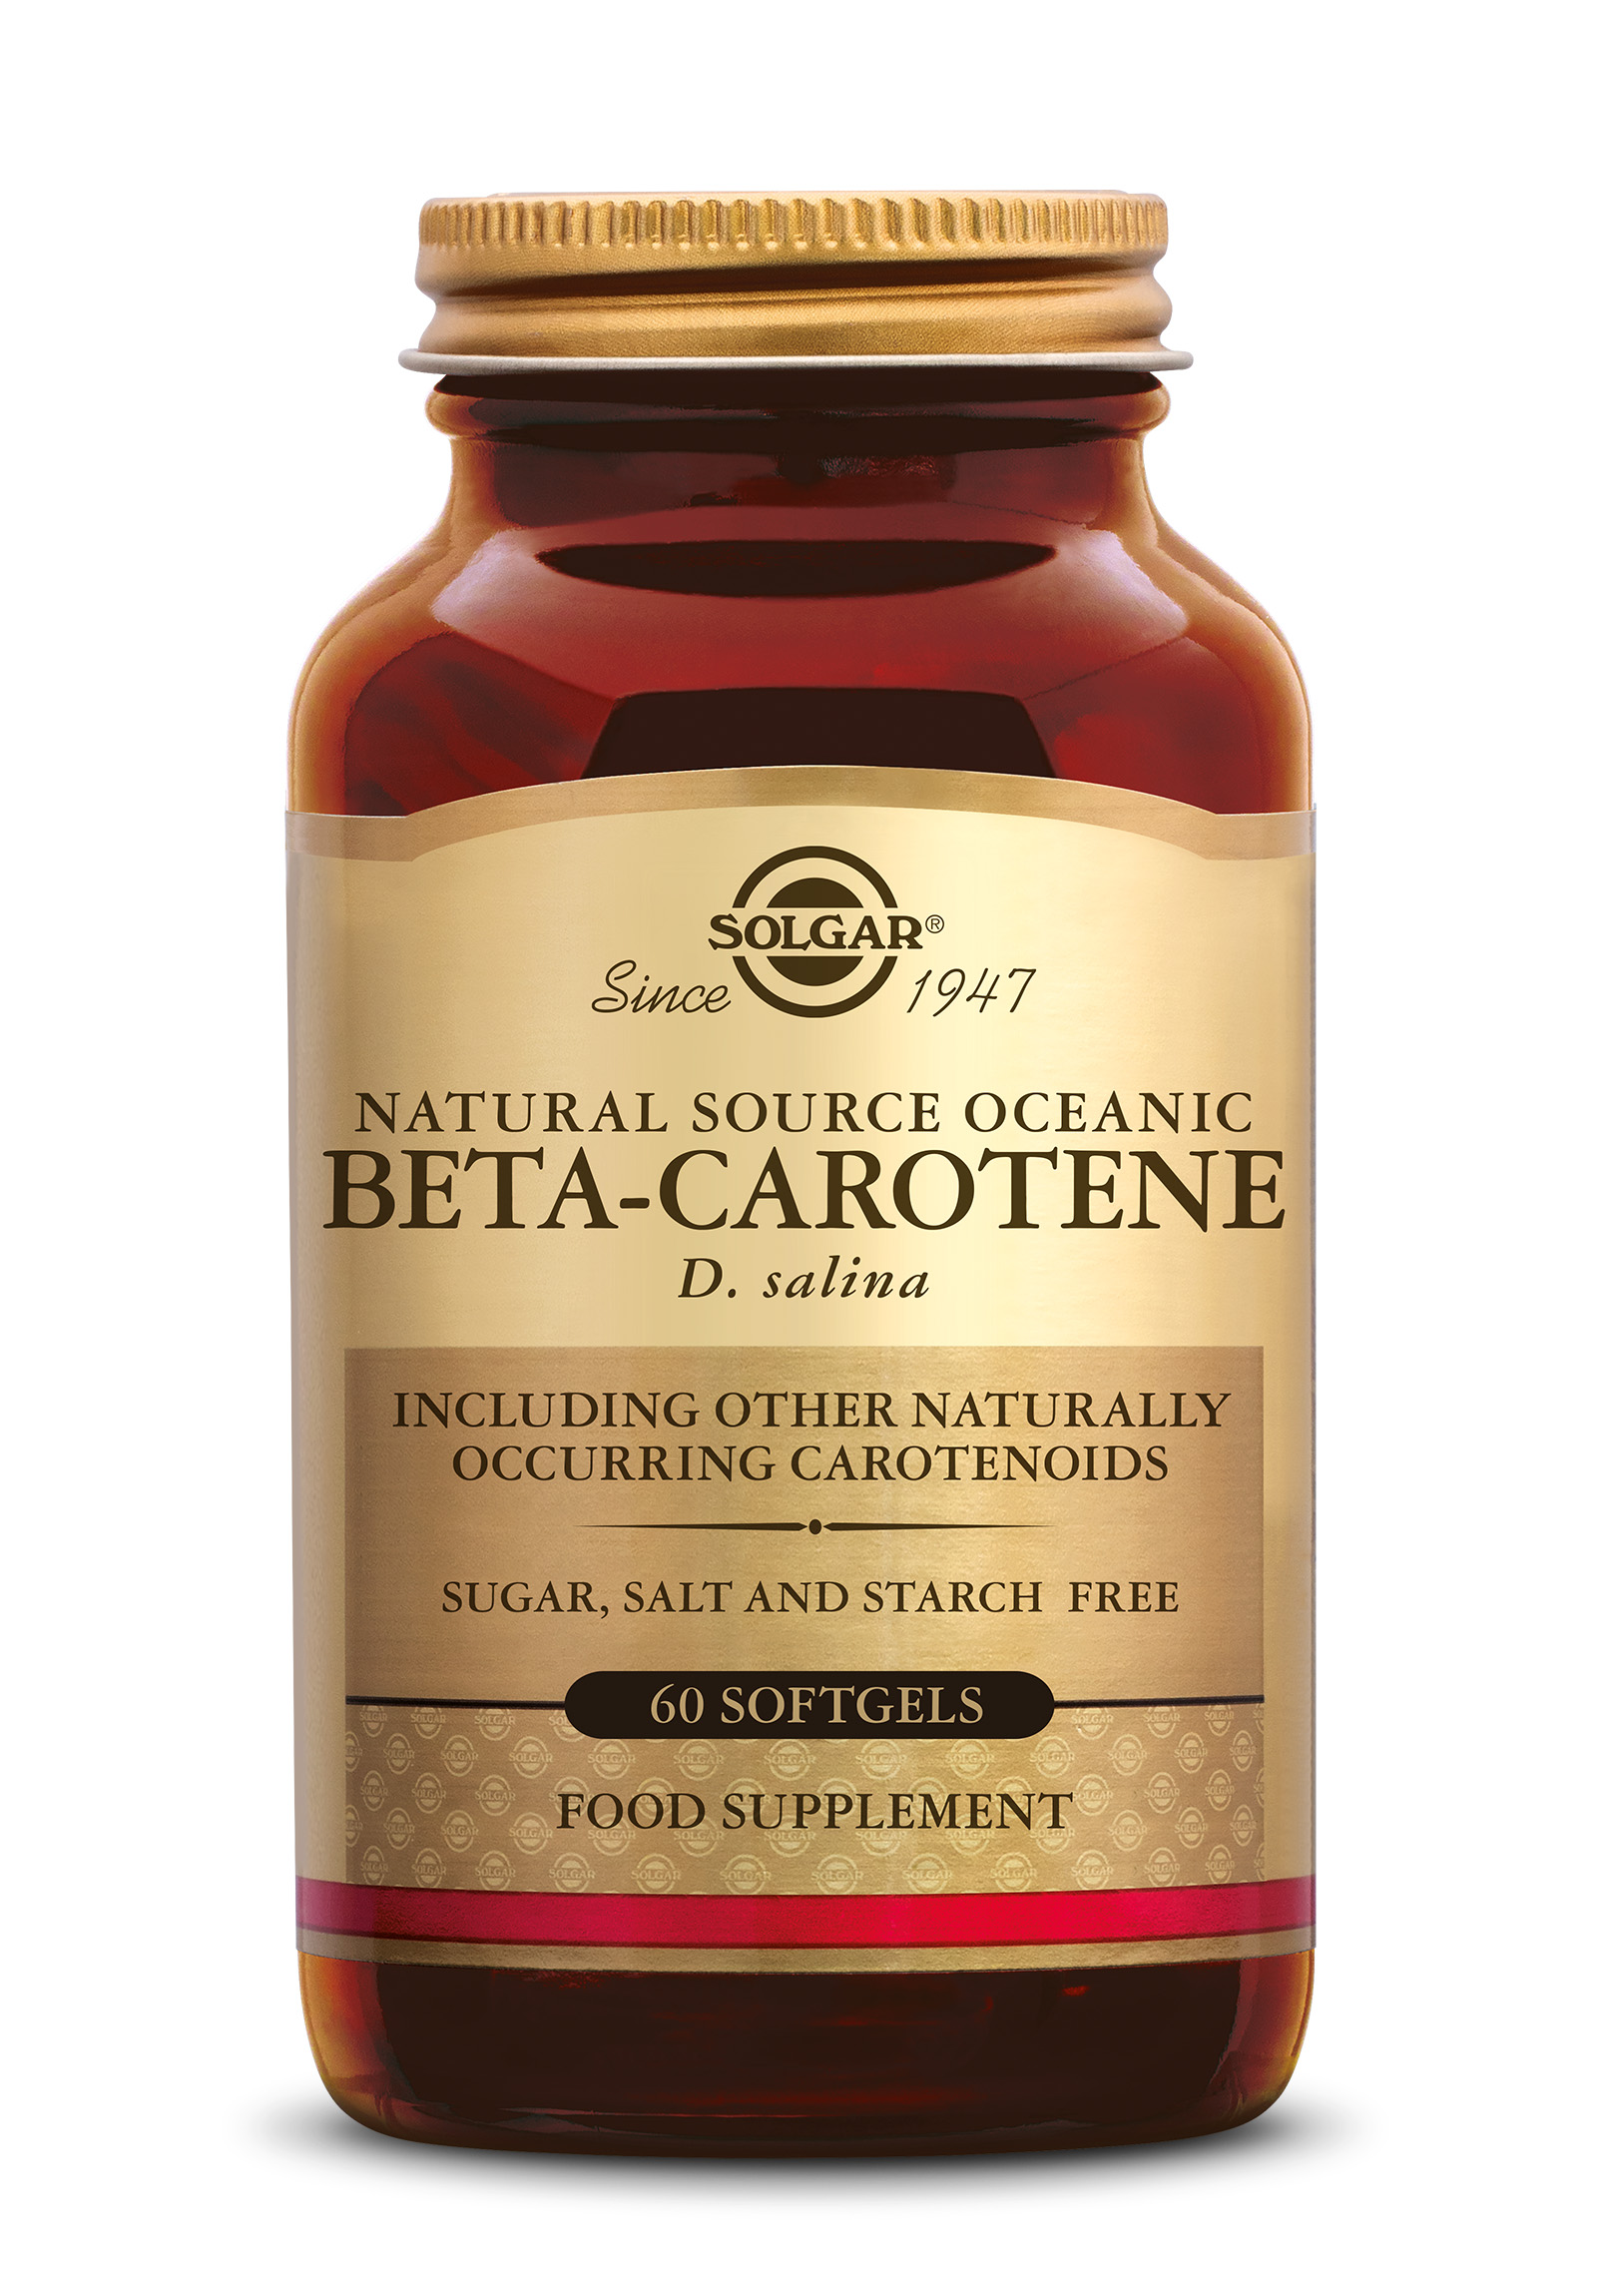 Solgar Bèta-Carotene 7 mg (60 stuks)